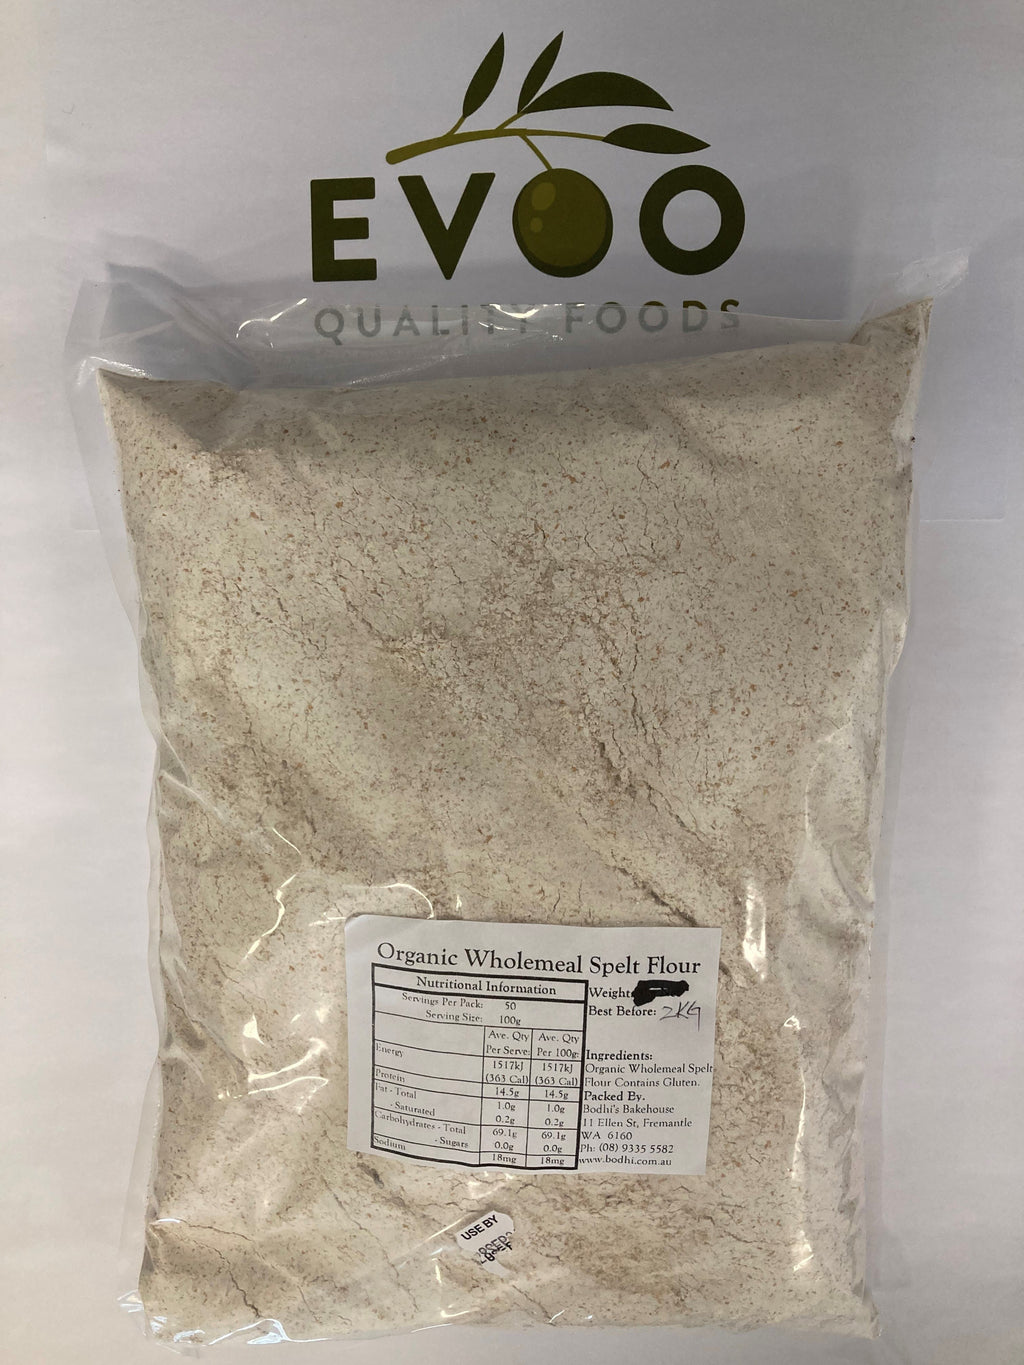 Flour Spelt Organic Wholemeal 2kg Evoo QF